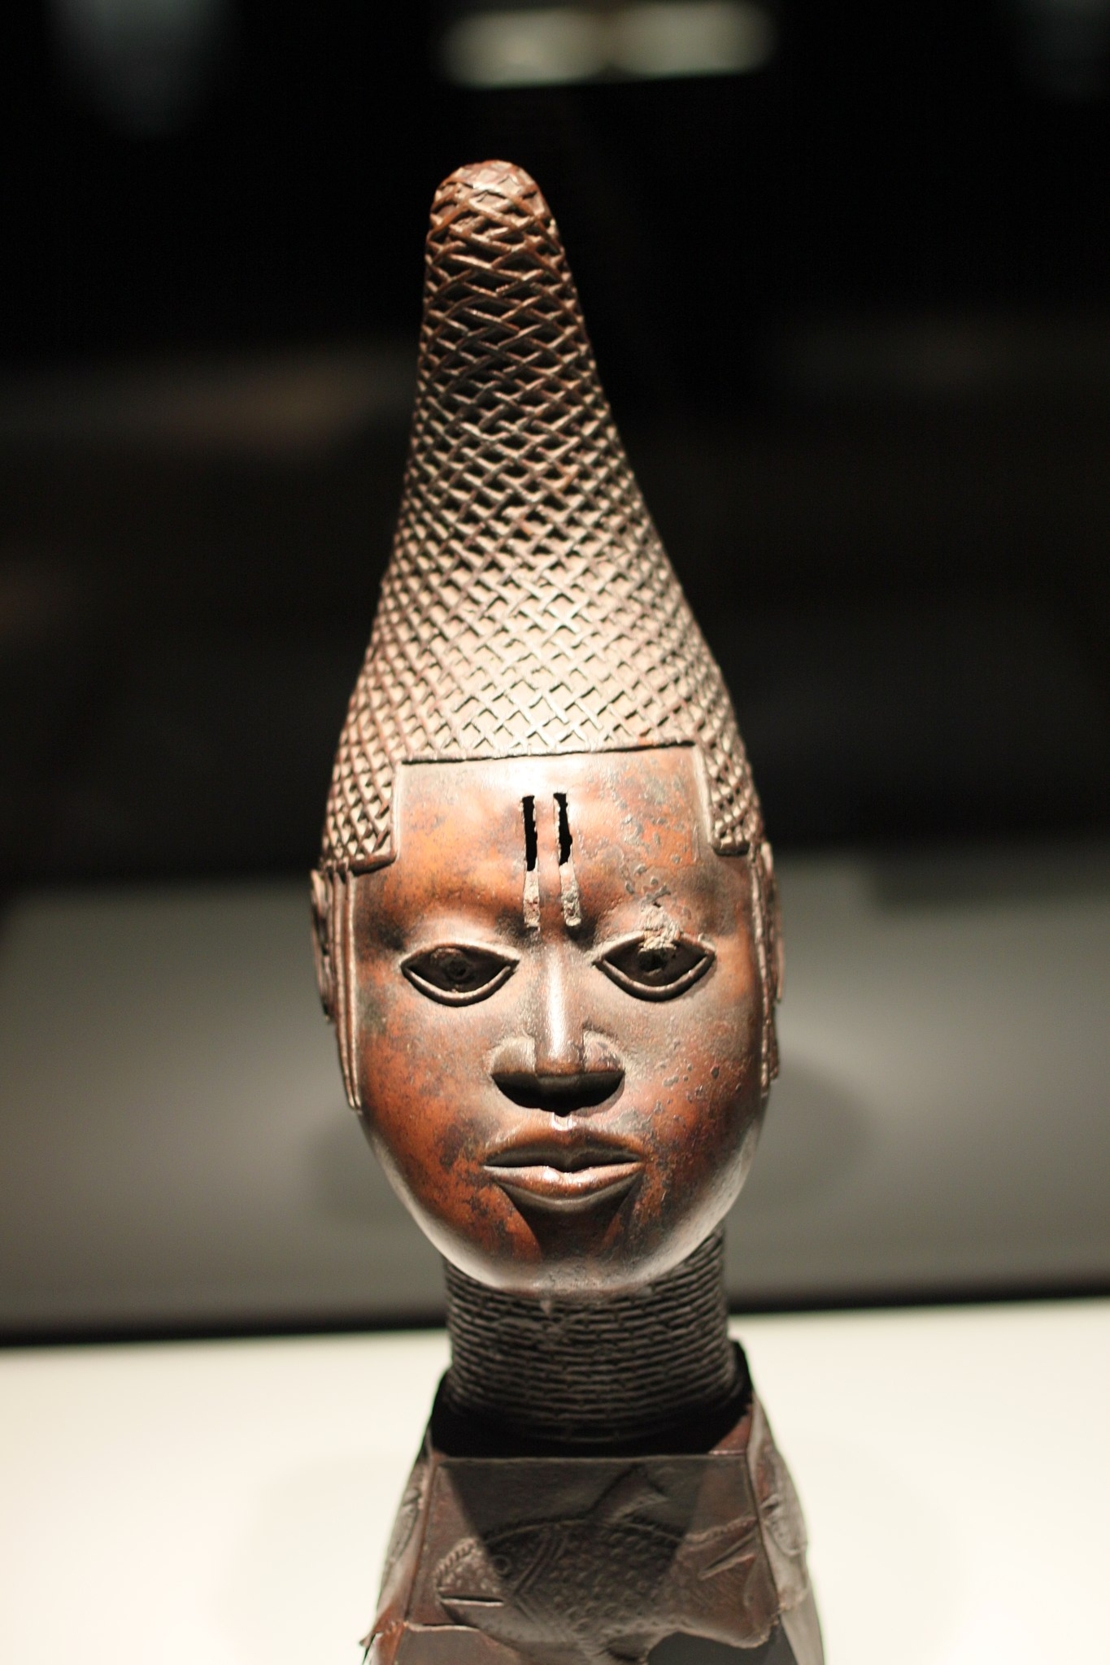 Afrikaabteilung_in_Ethnological_Museum_Berlin.JPG